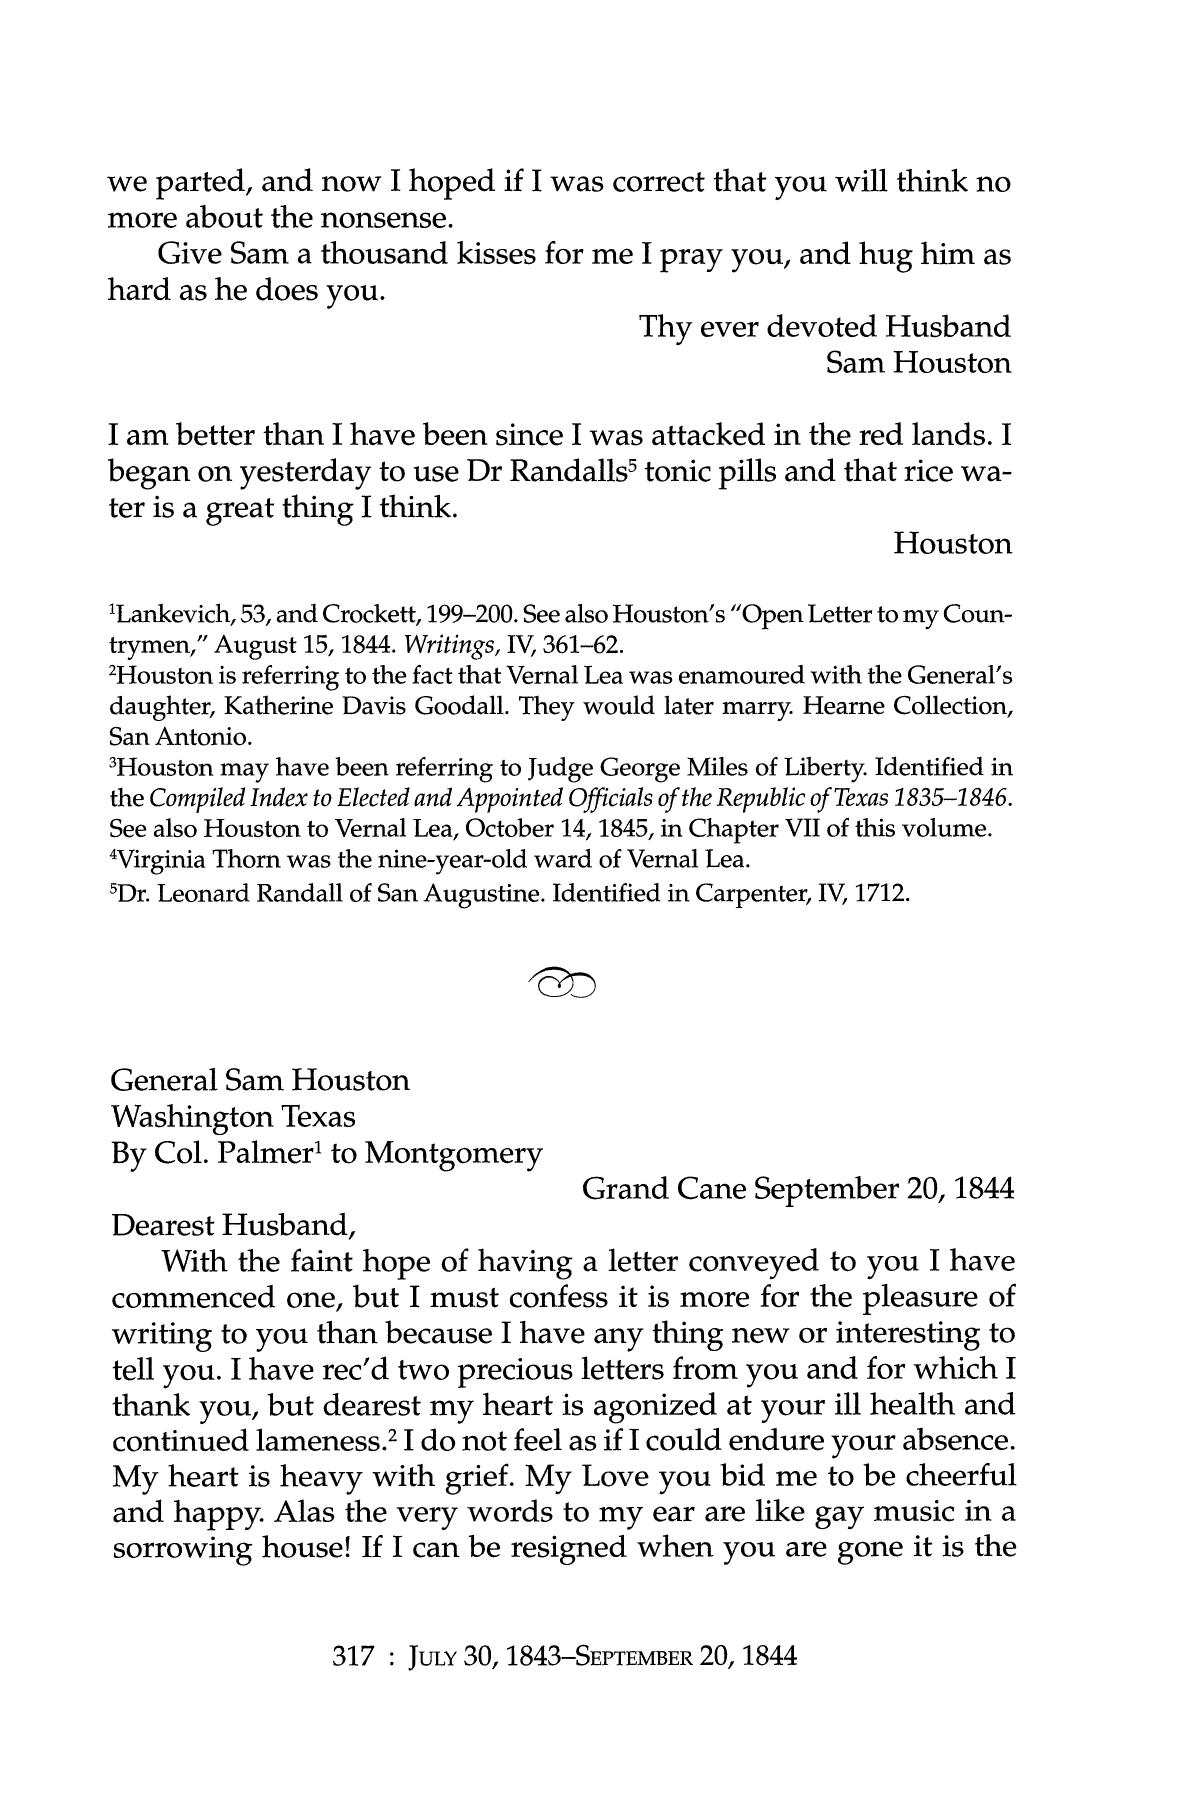 The Personal Correspondence of Sam Houston, Volume 1: 1839-1845
                                                
                                                    317
                                                